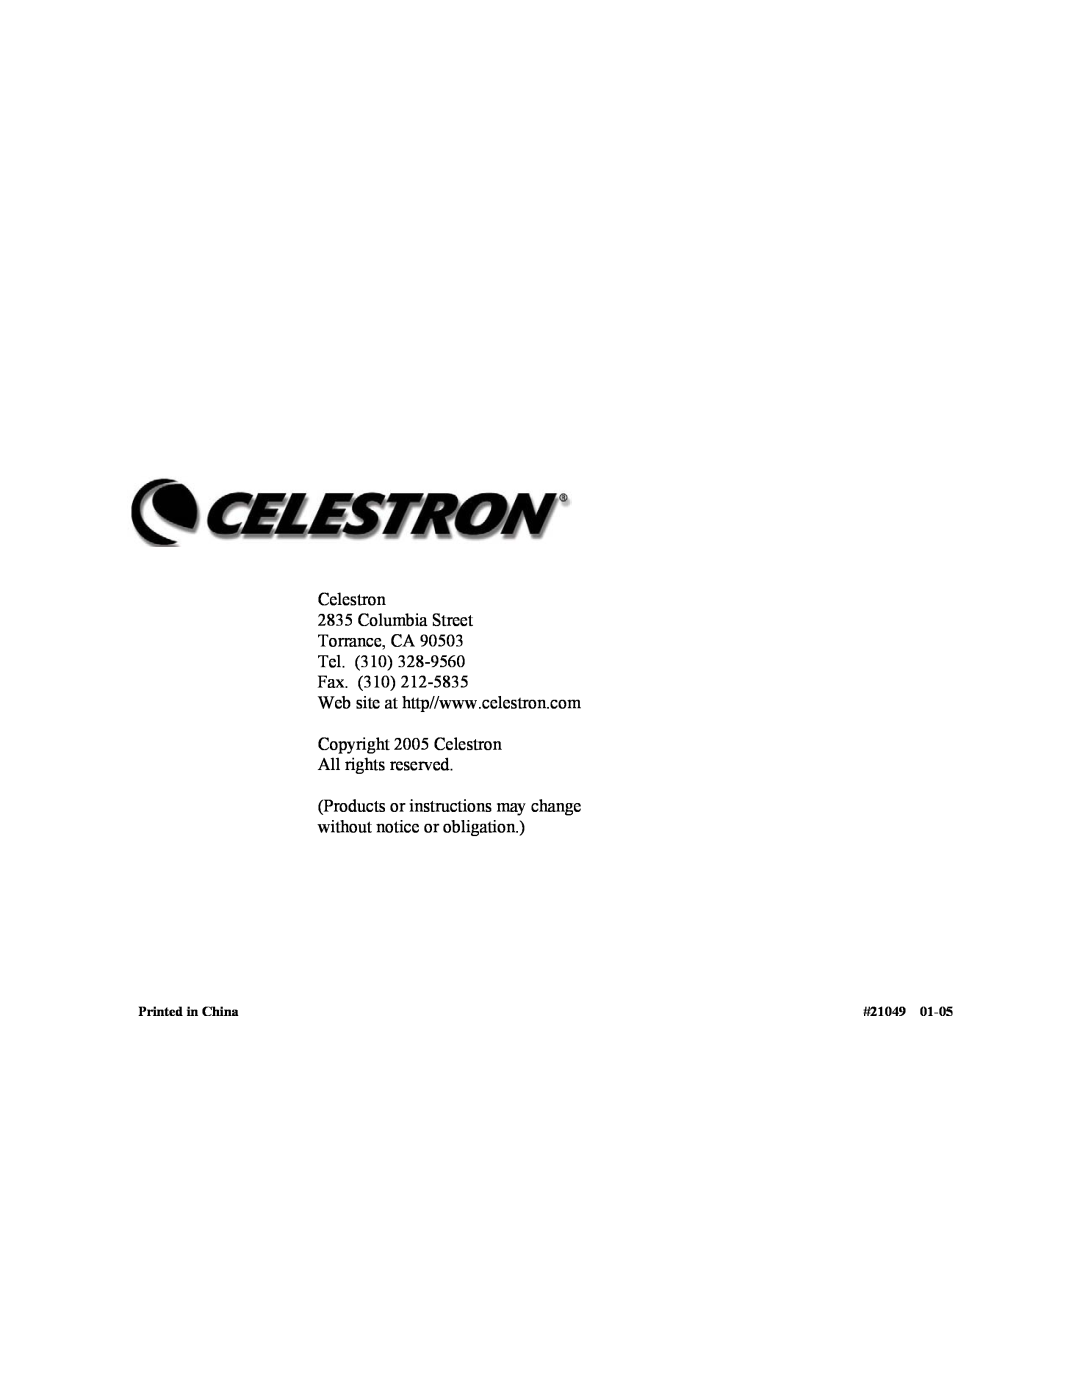 Celestron 127 Celestron 2835 Columbia Street Torrance, CA, Tel. 310 Fax, Copyright 2005 Celestron All rights reserved 